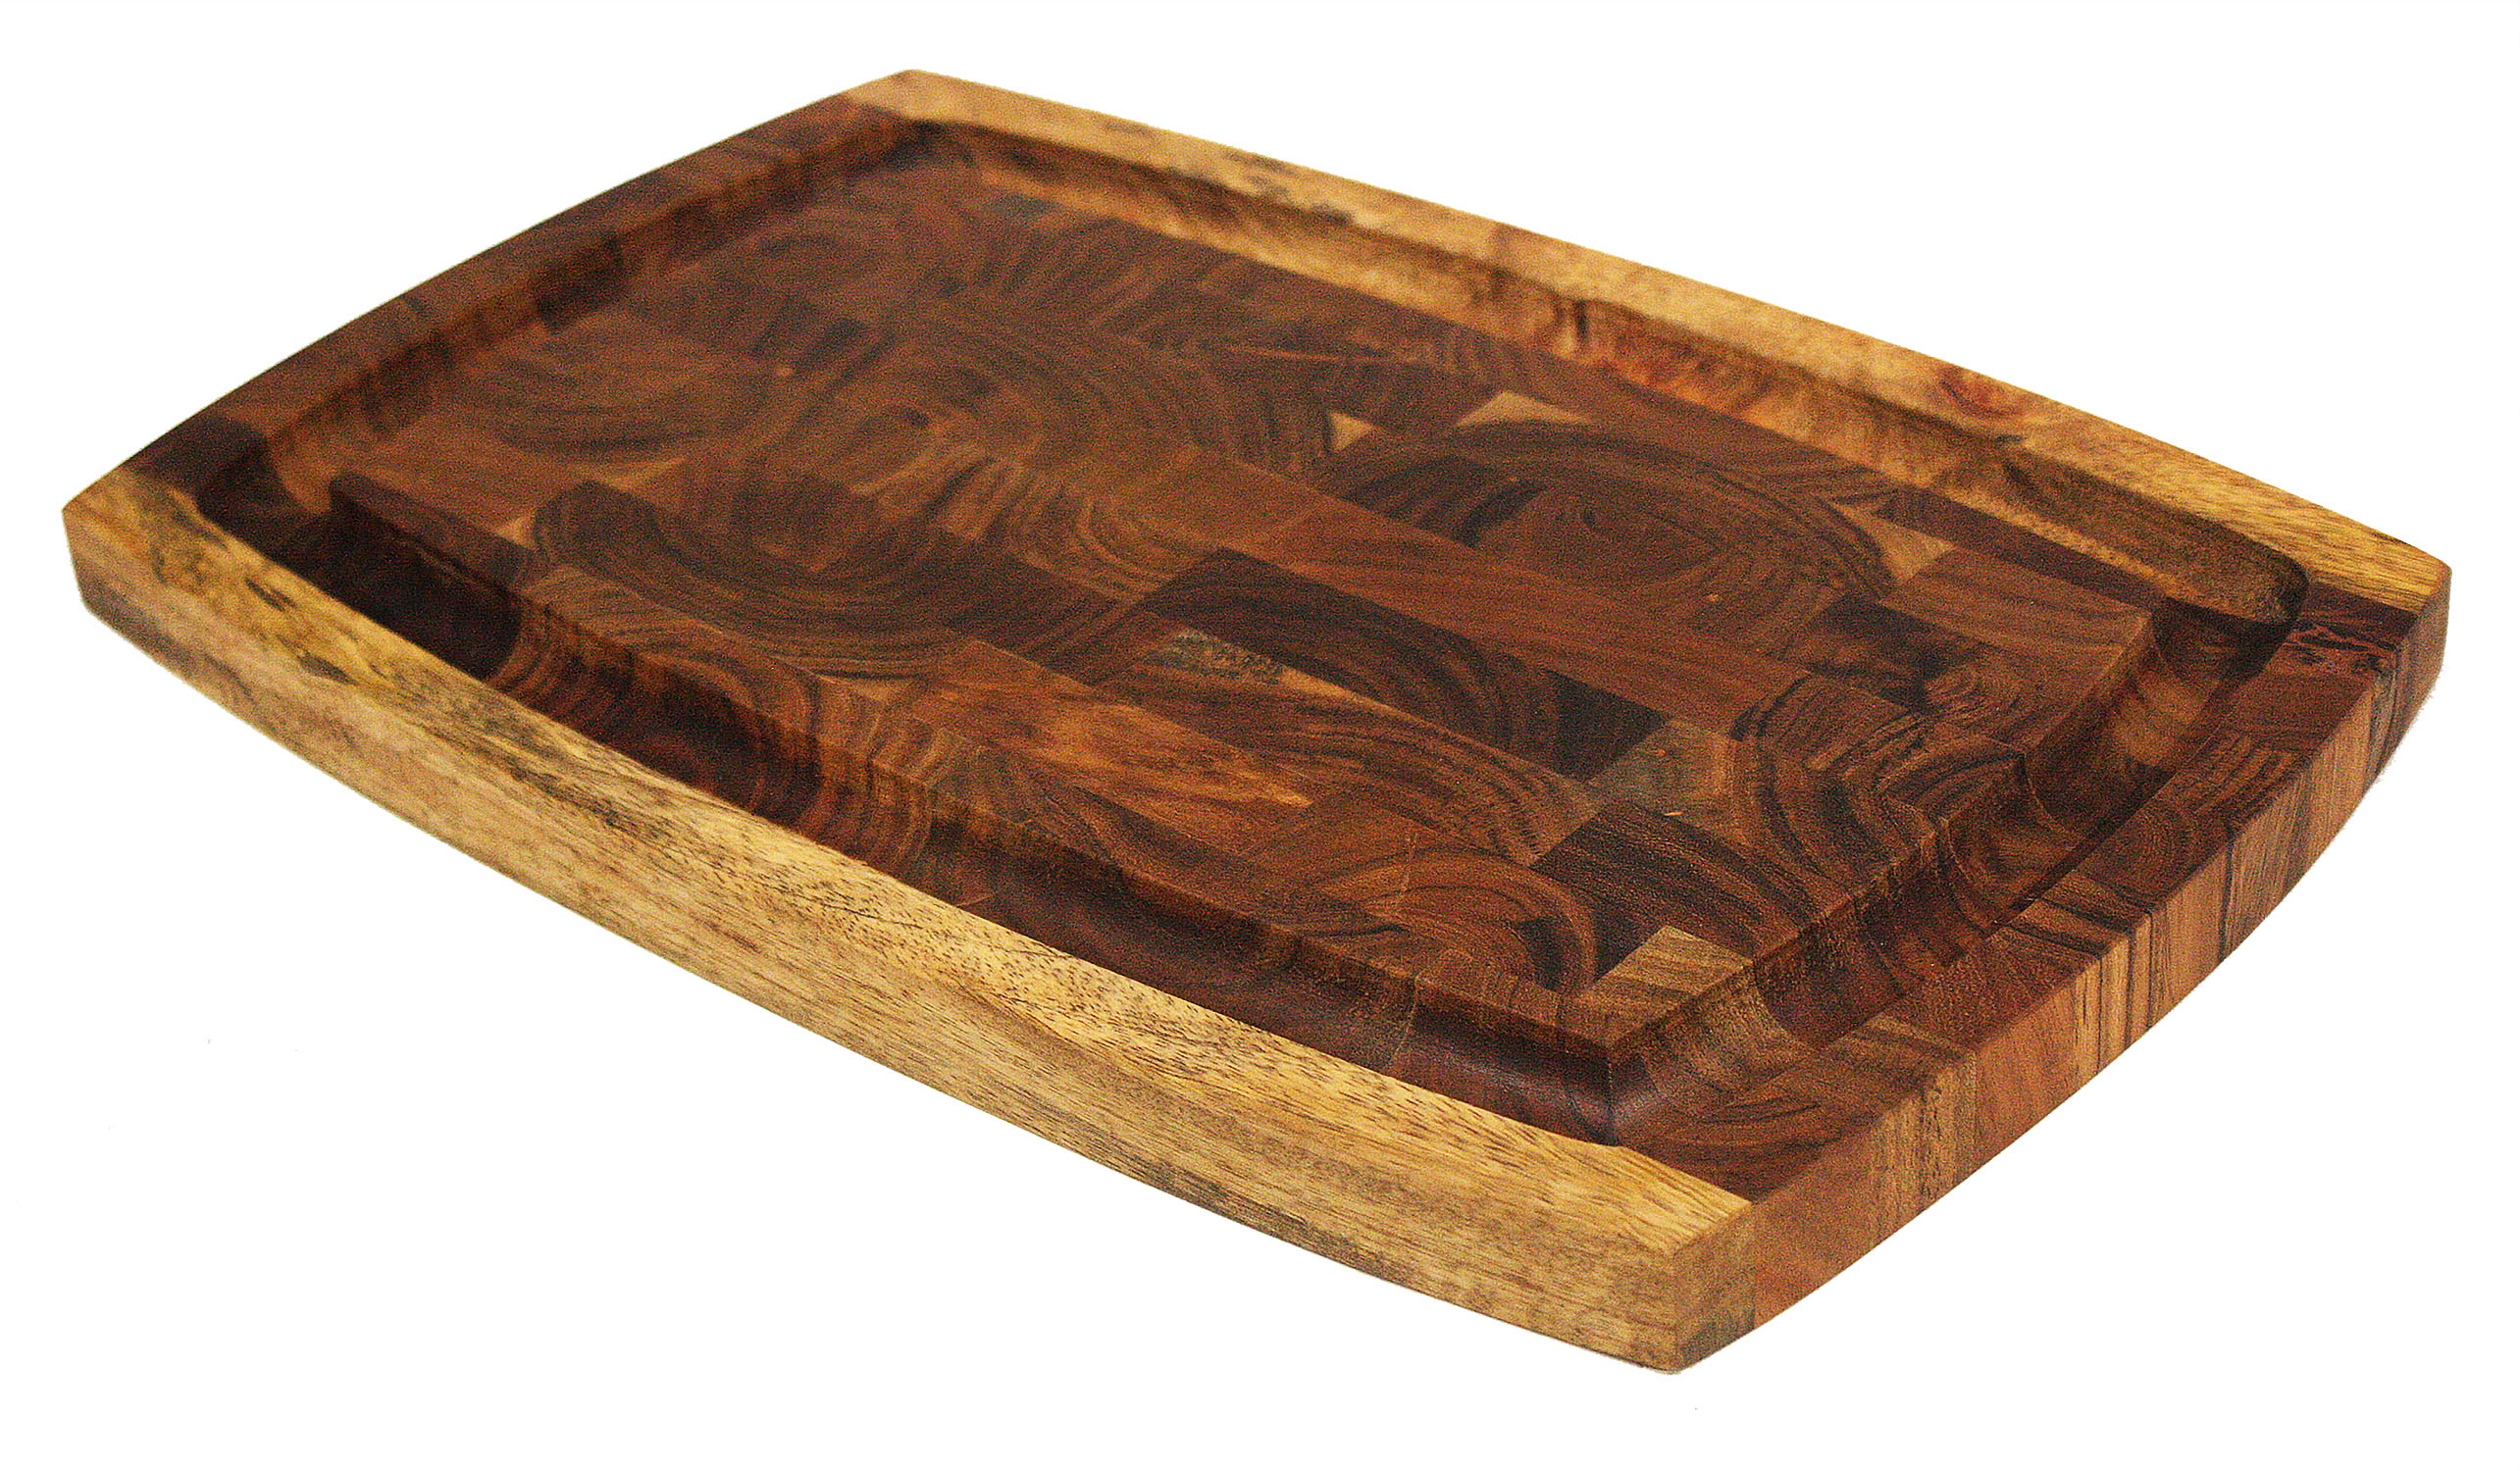 Mountain Woods Extra Thick Organic End-Grain Hardwood Acacia Cutting Board w/Juice Groove | Butcher Block | Wood Chopping Board - 17" x 11" x 1" - image 1 of 1